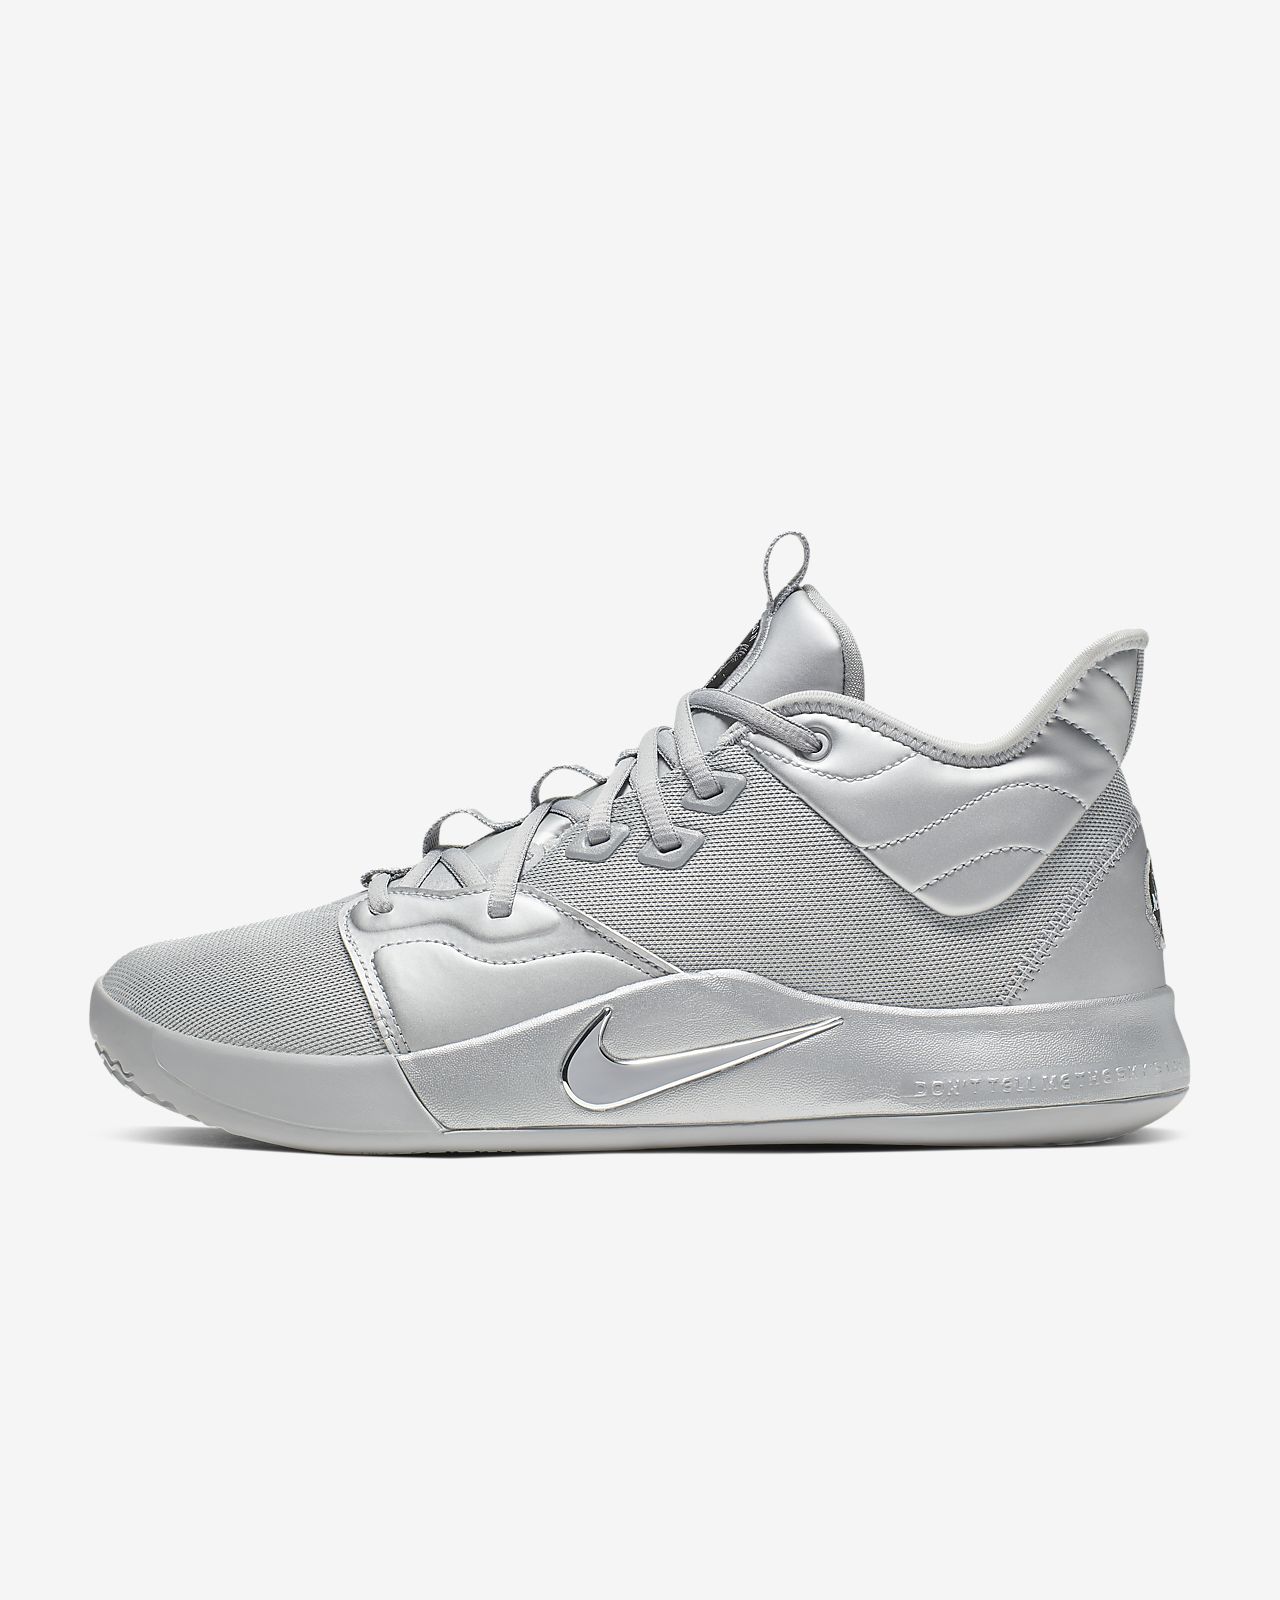 PG 3 NASA Basketball Shoe. Nike PH